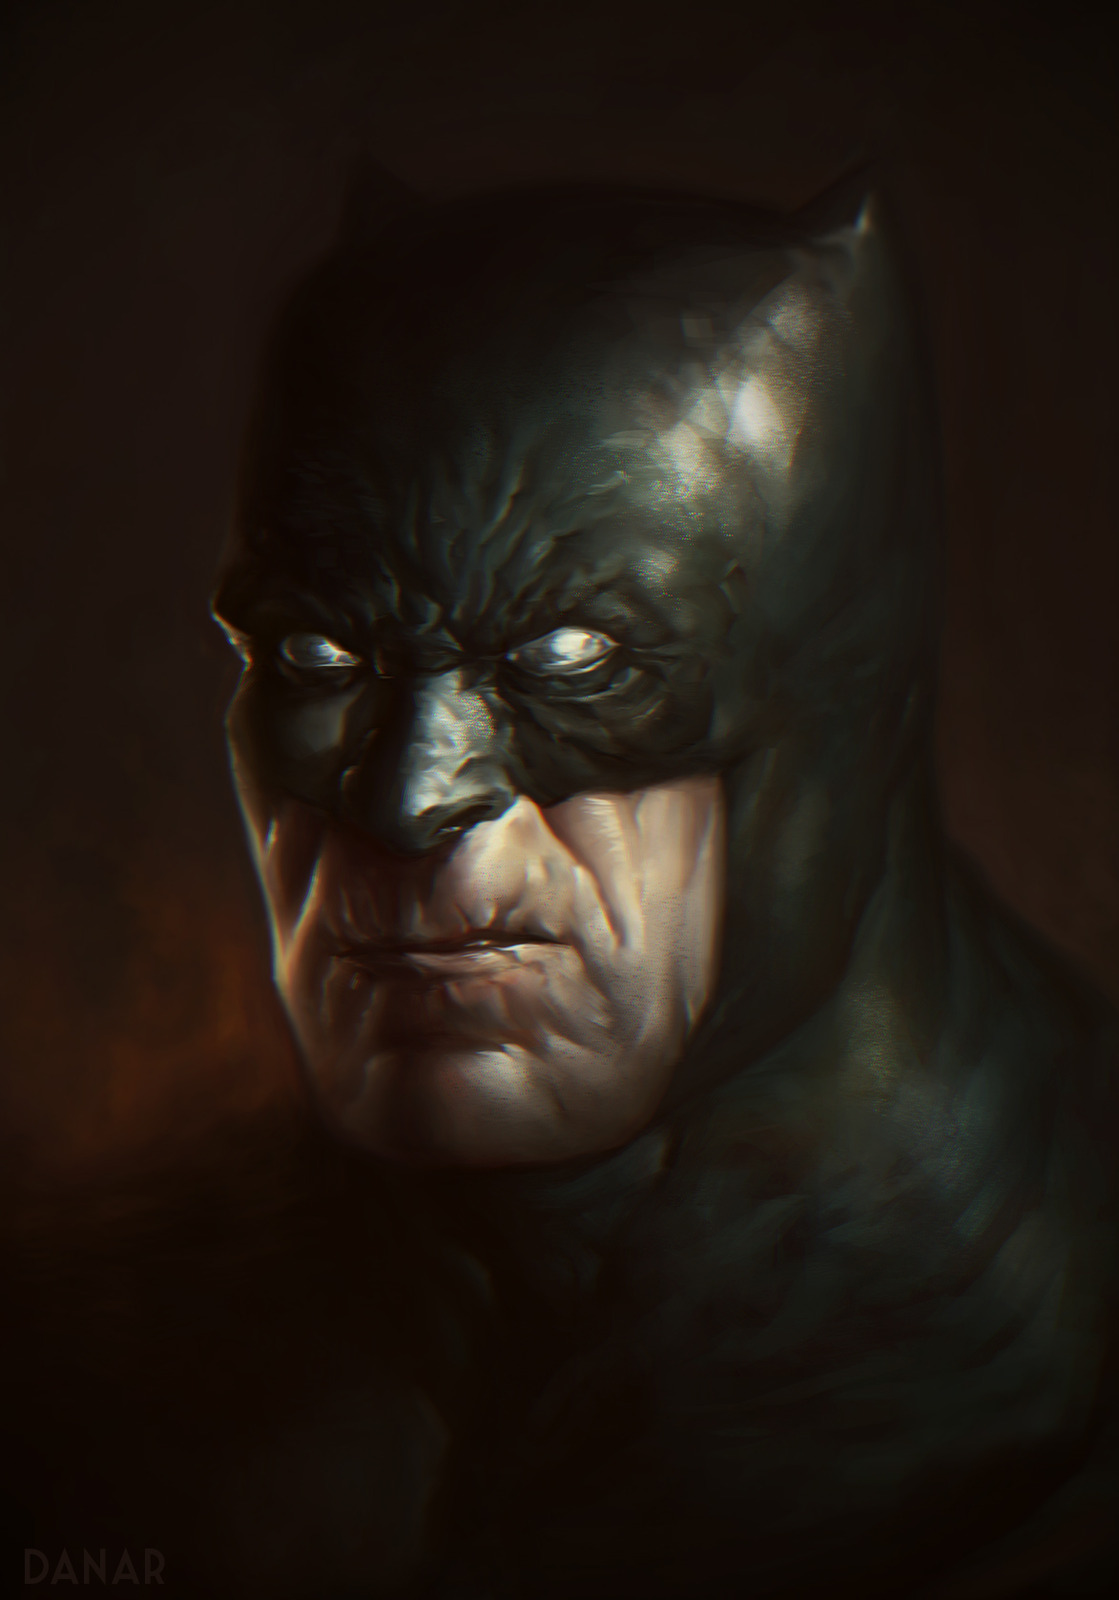 Fine Art: Gee, Batman, You’re Not Looking So Hot